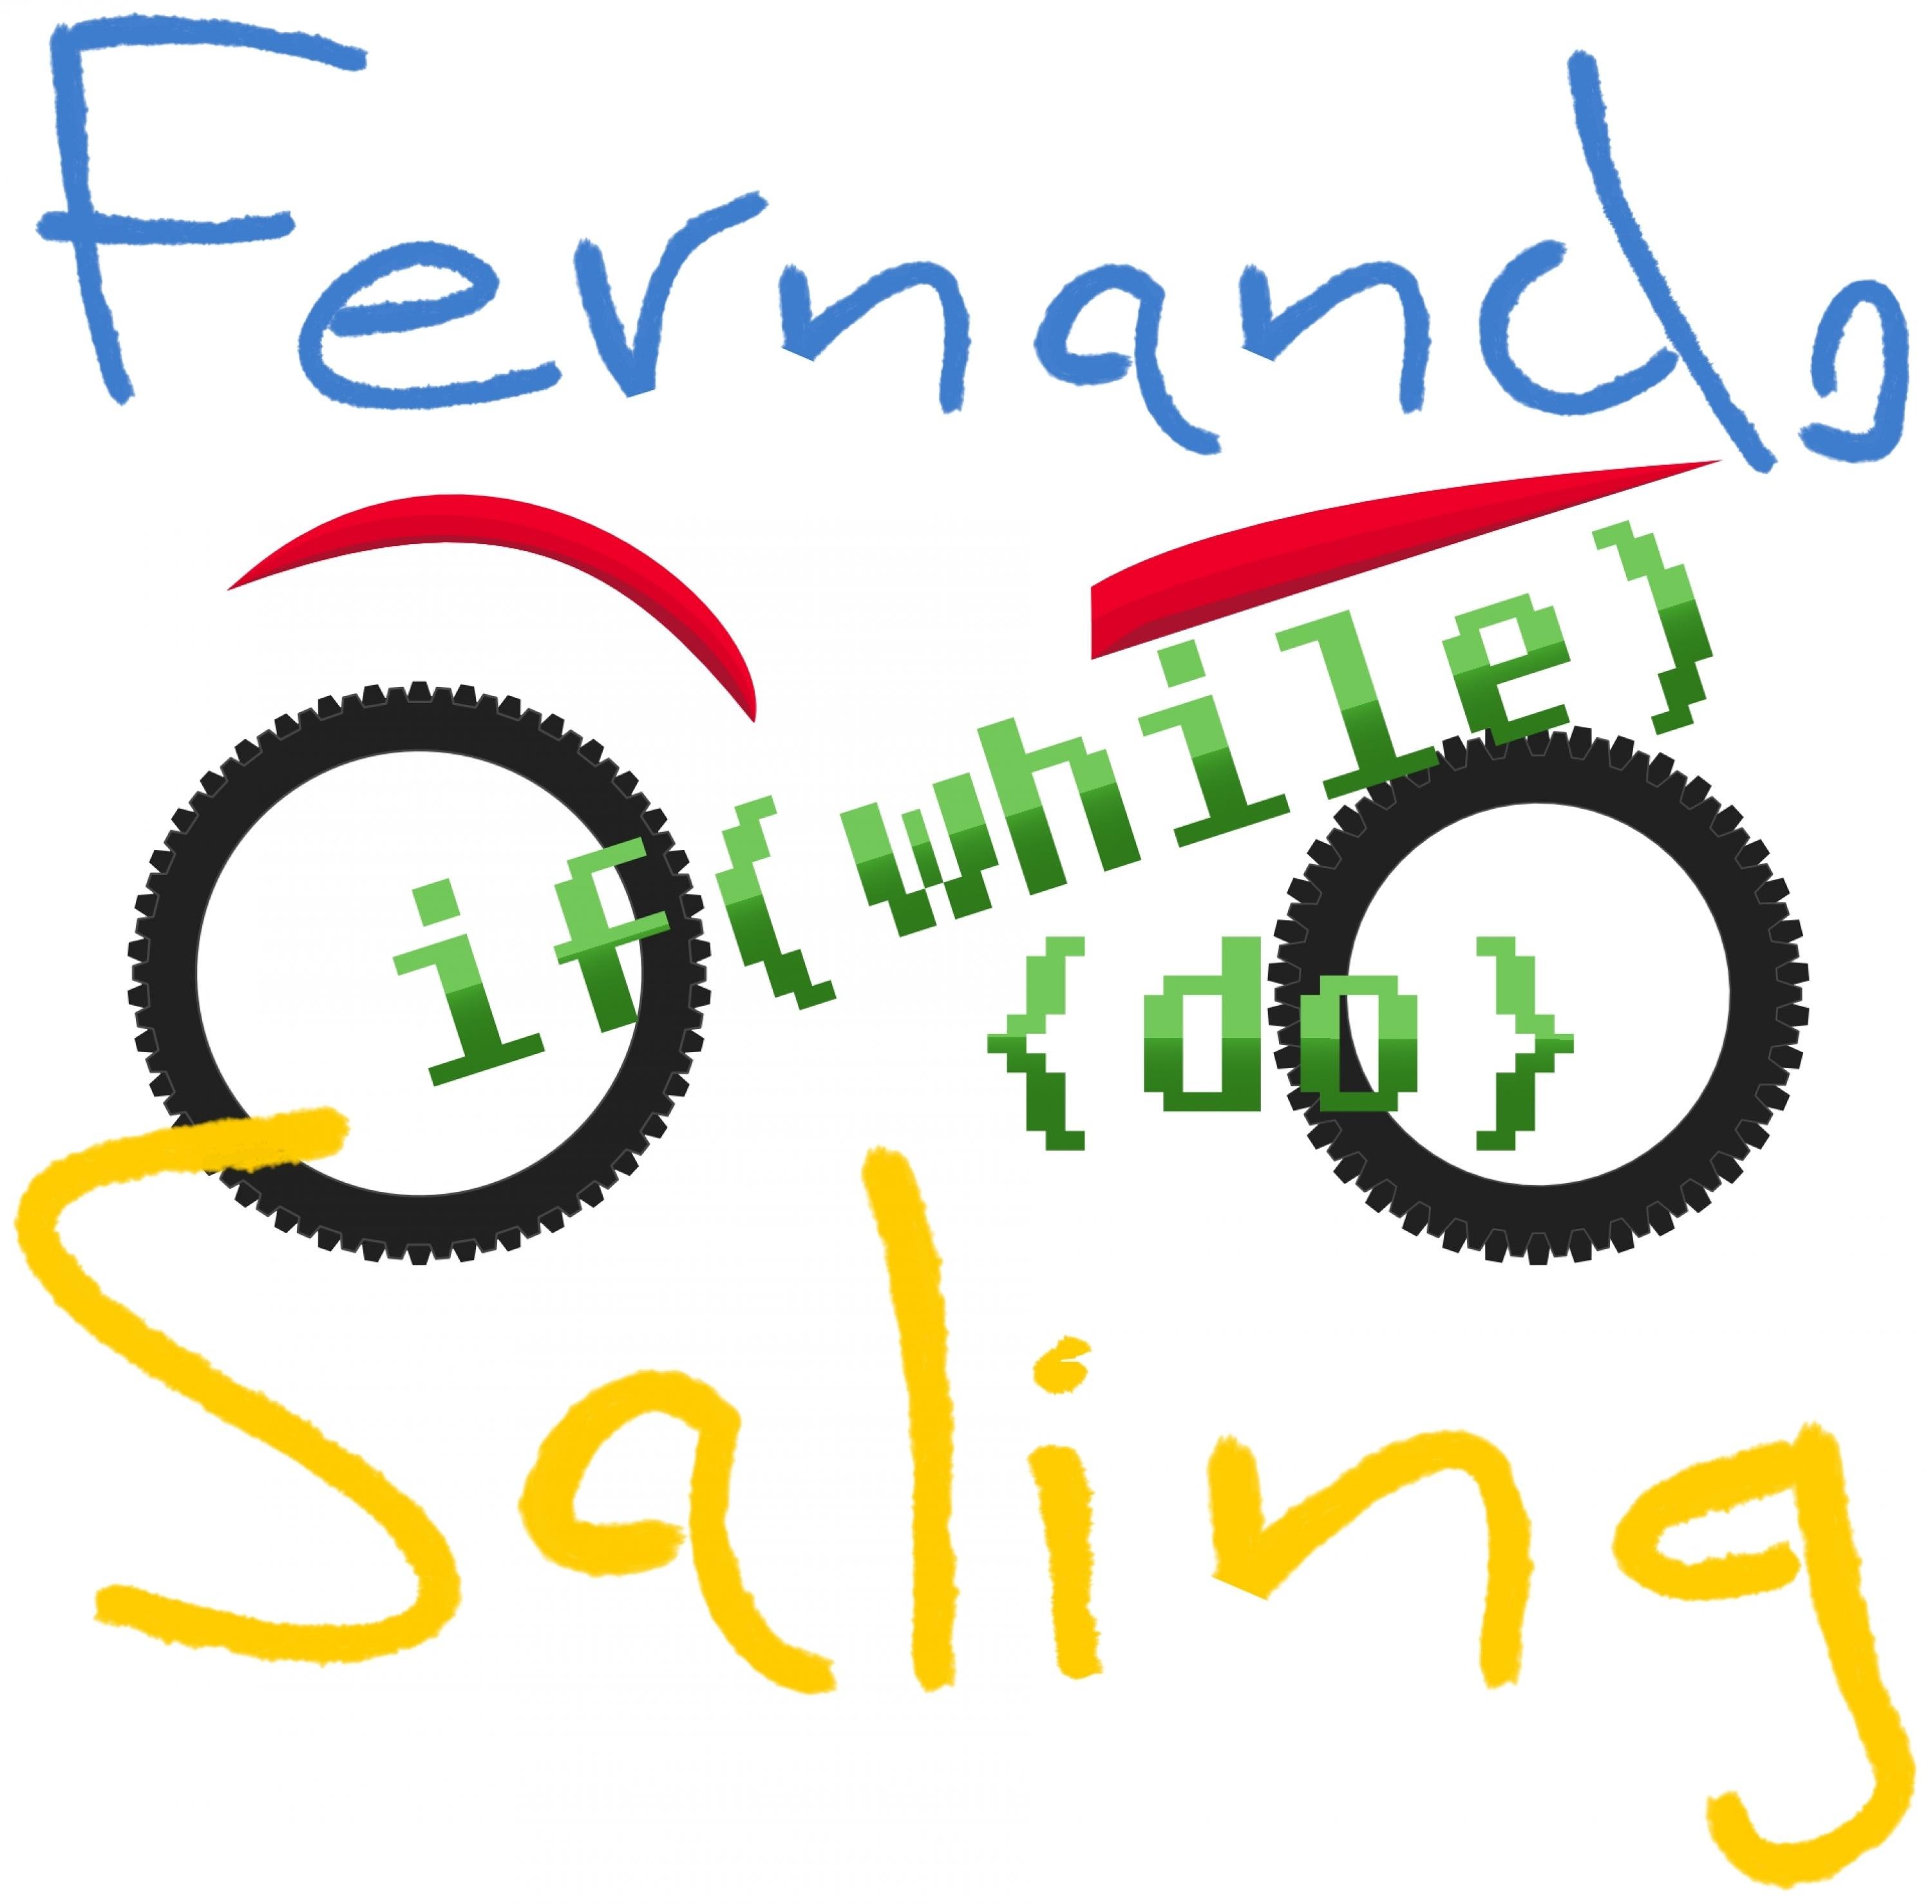 Fernando Saling cover photo